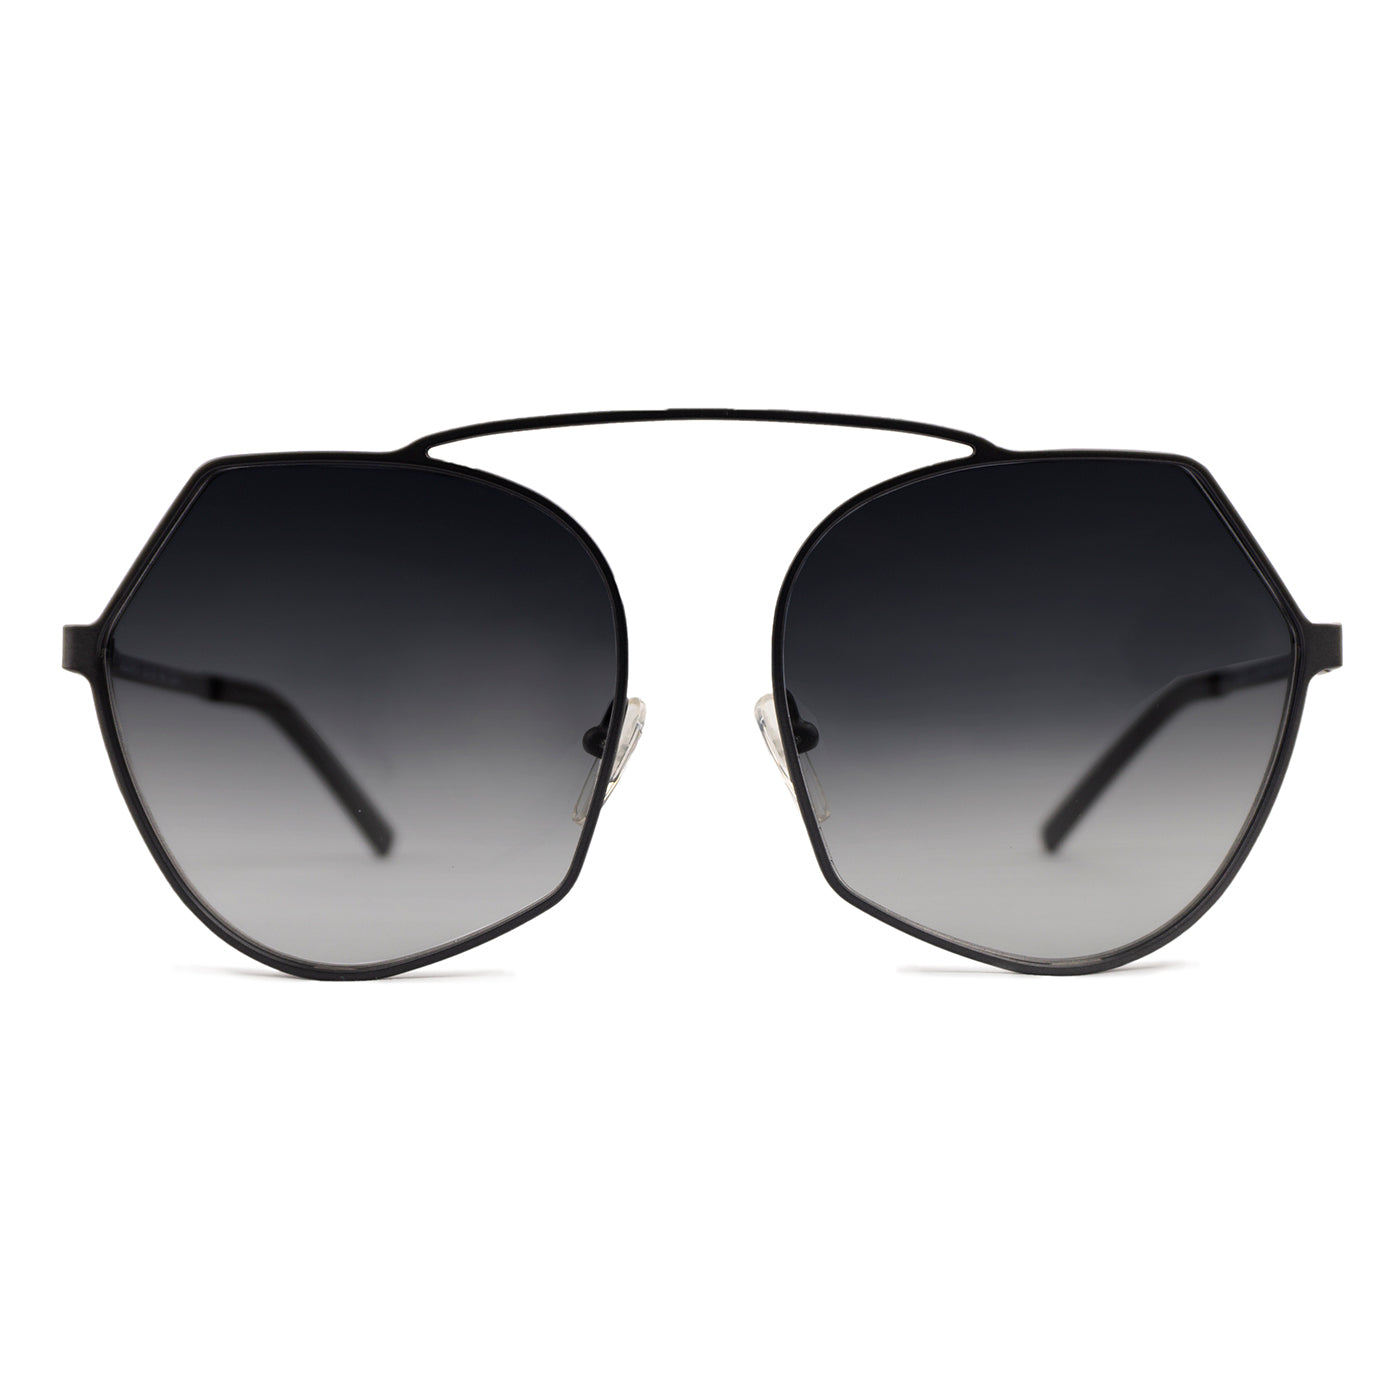 Sienna Alexander Belgravia Sunglasses in Black